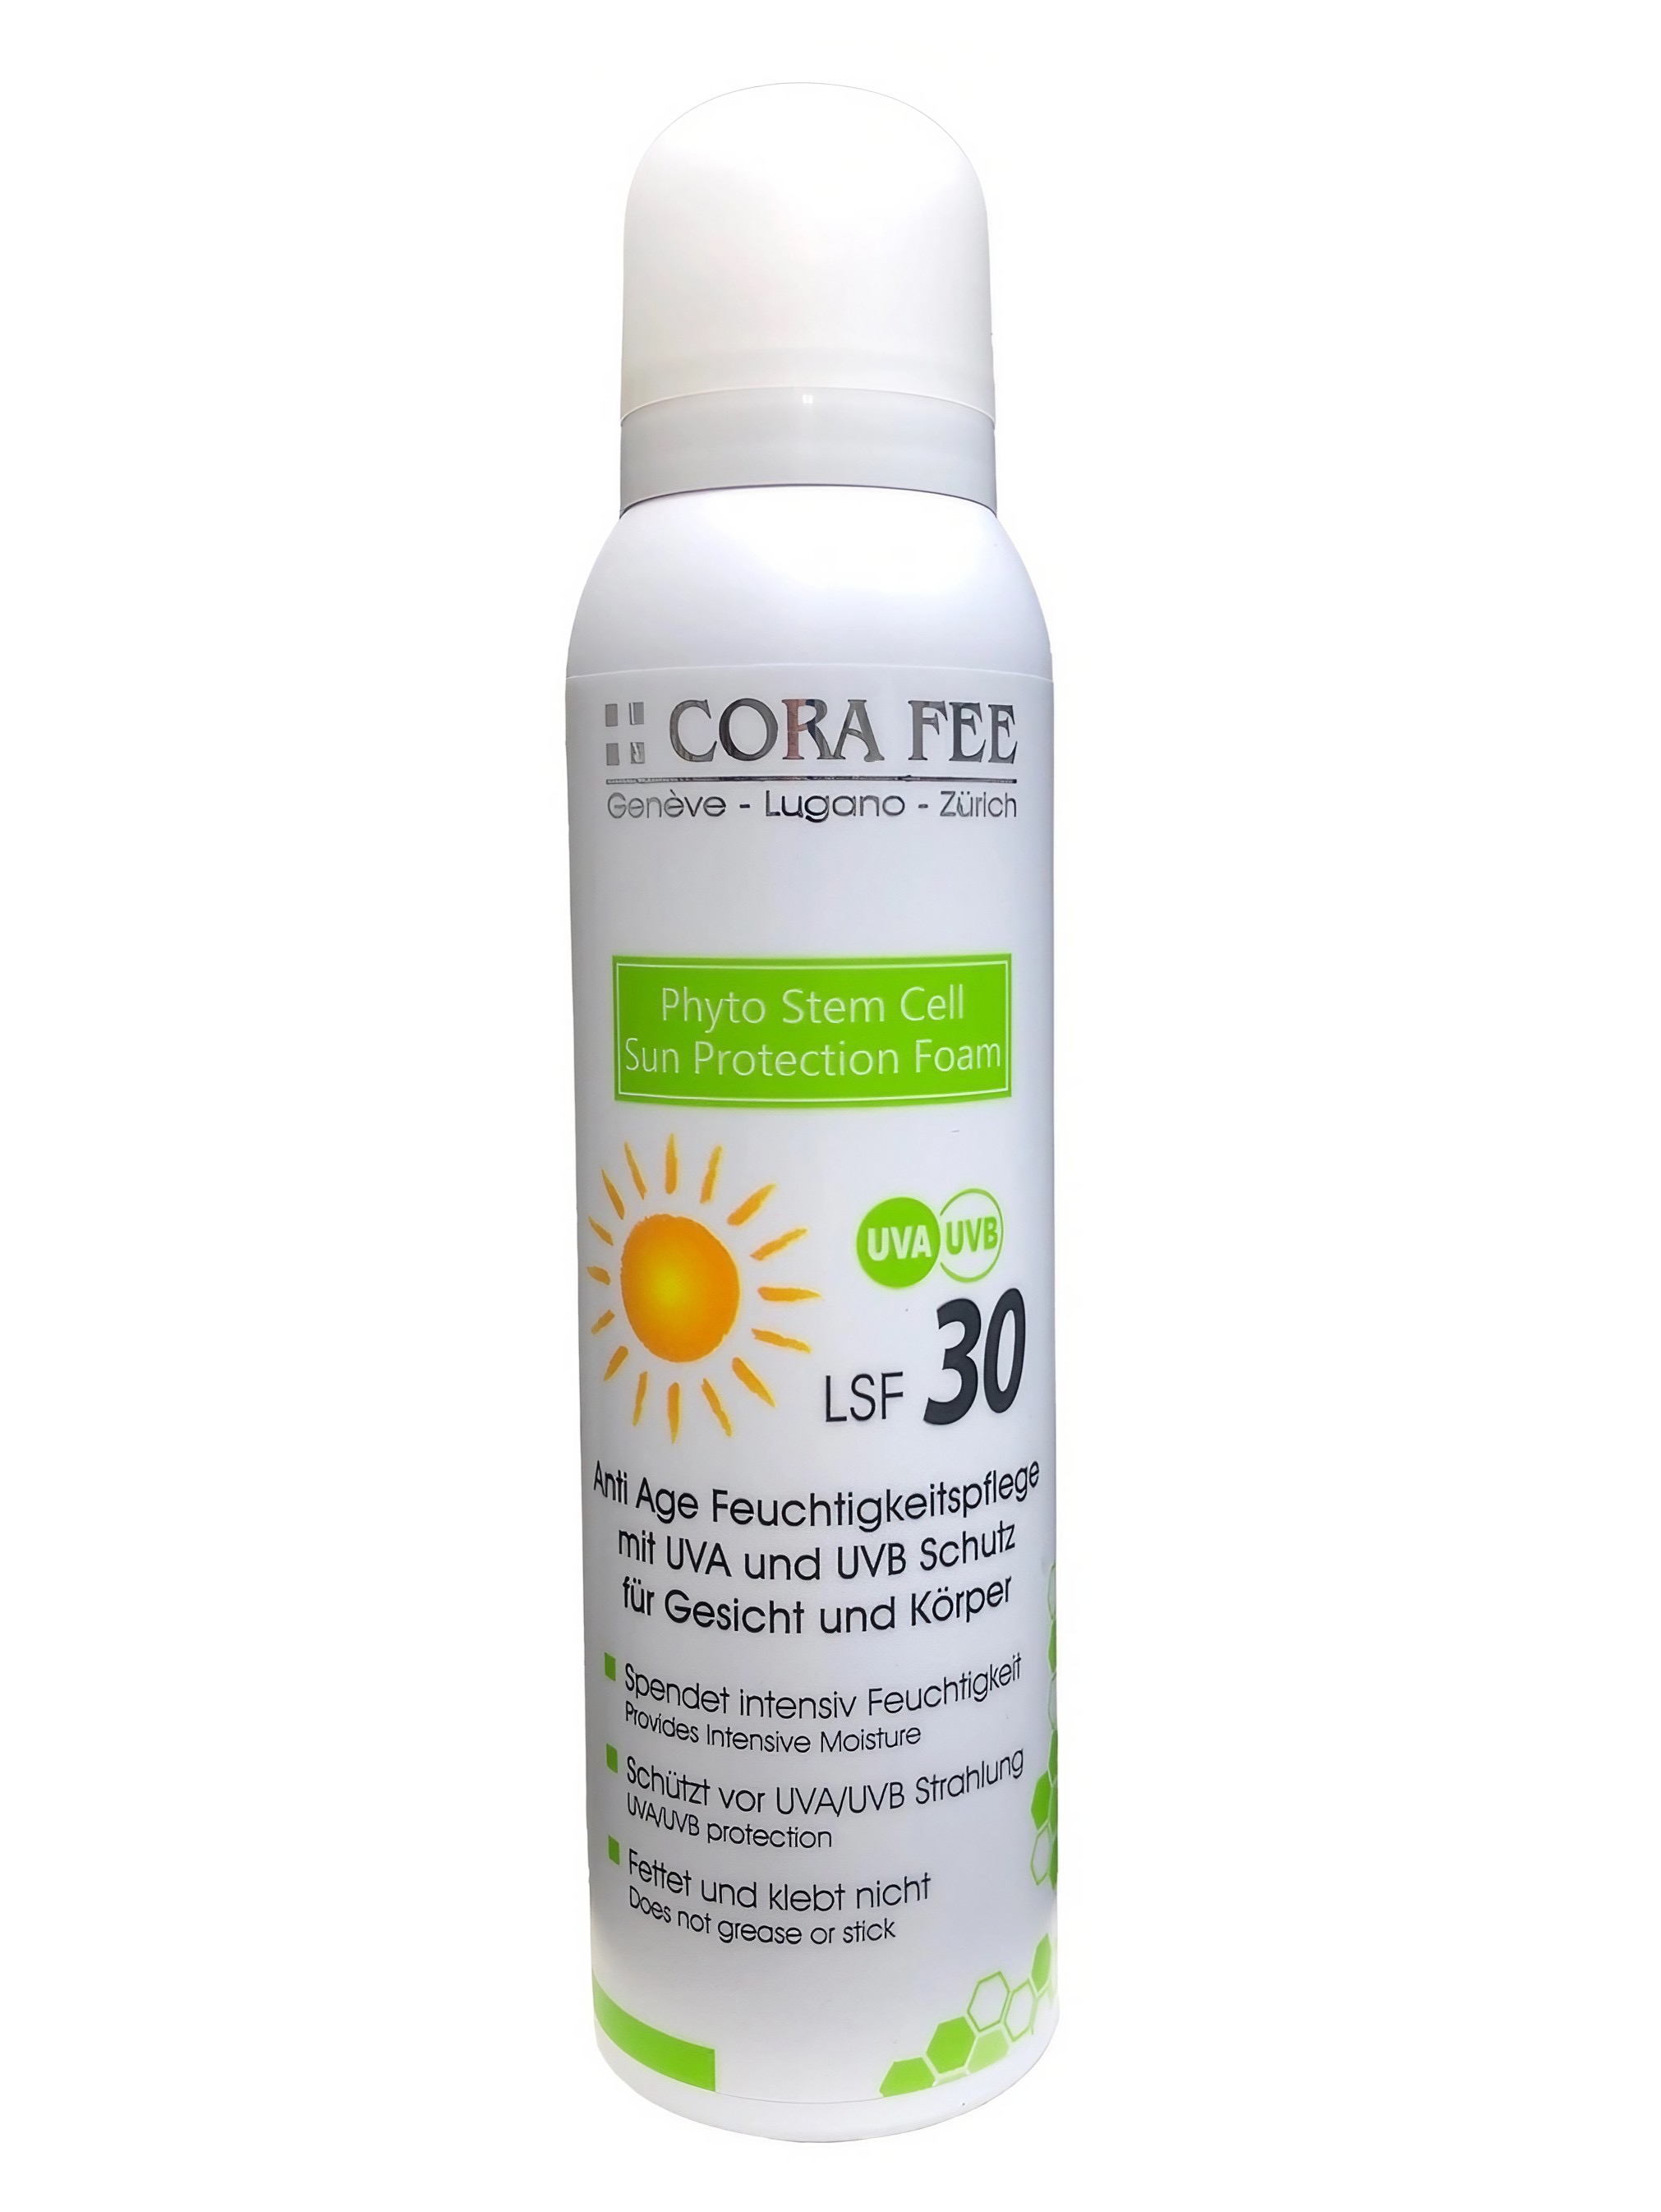 Cora Fee Phyto Stem Cell Sun Protection Foam LSF 30 | 150 ml